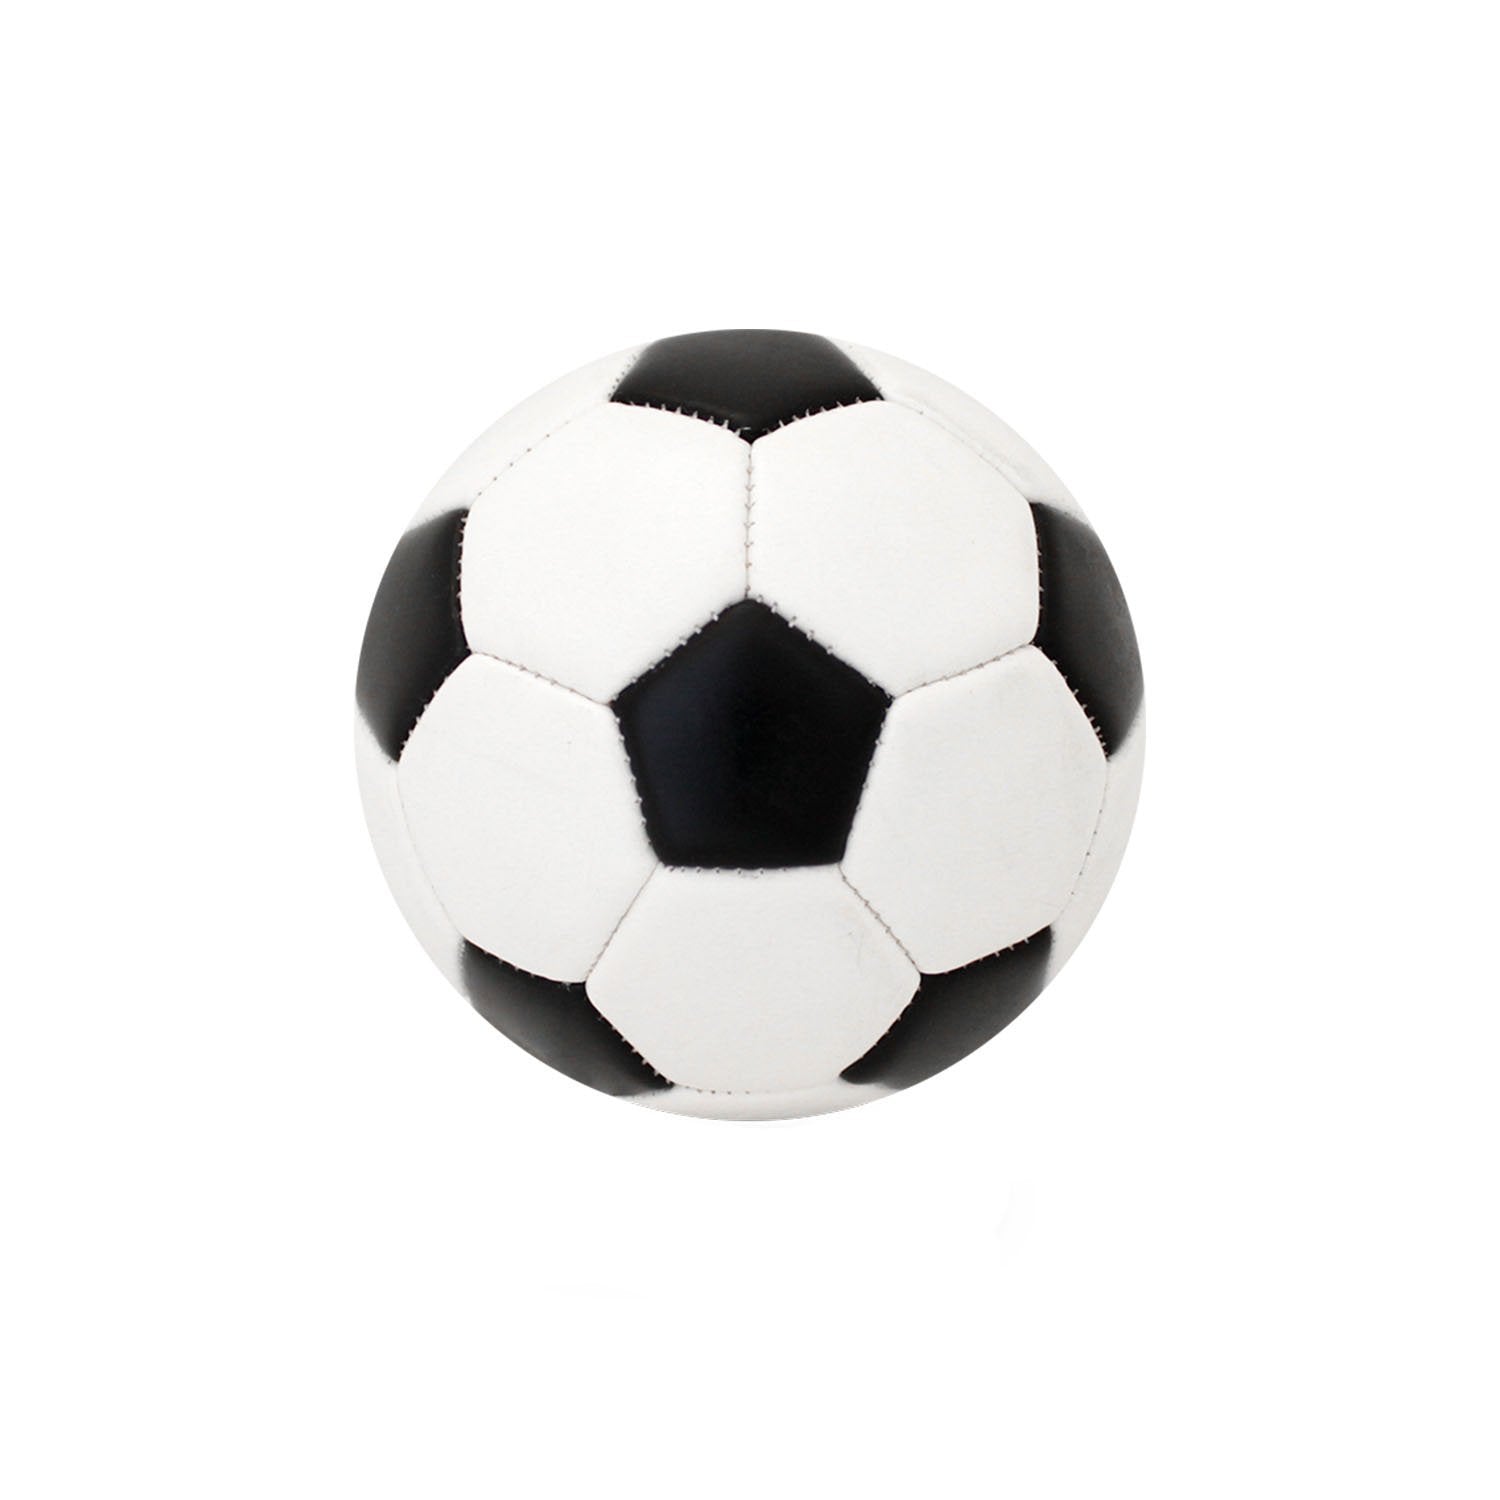 Soccer Balls.